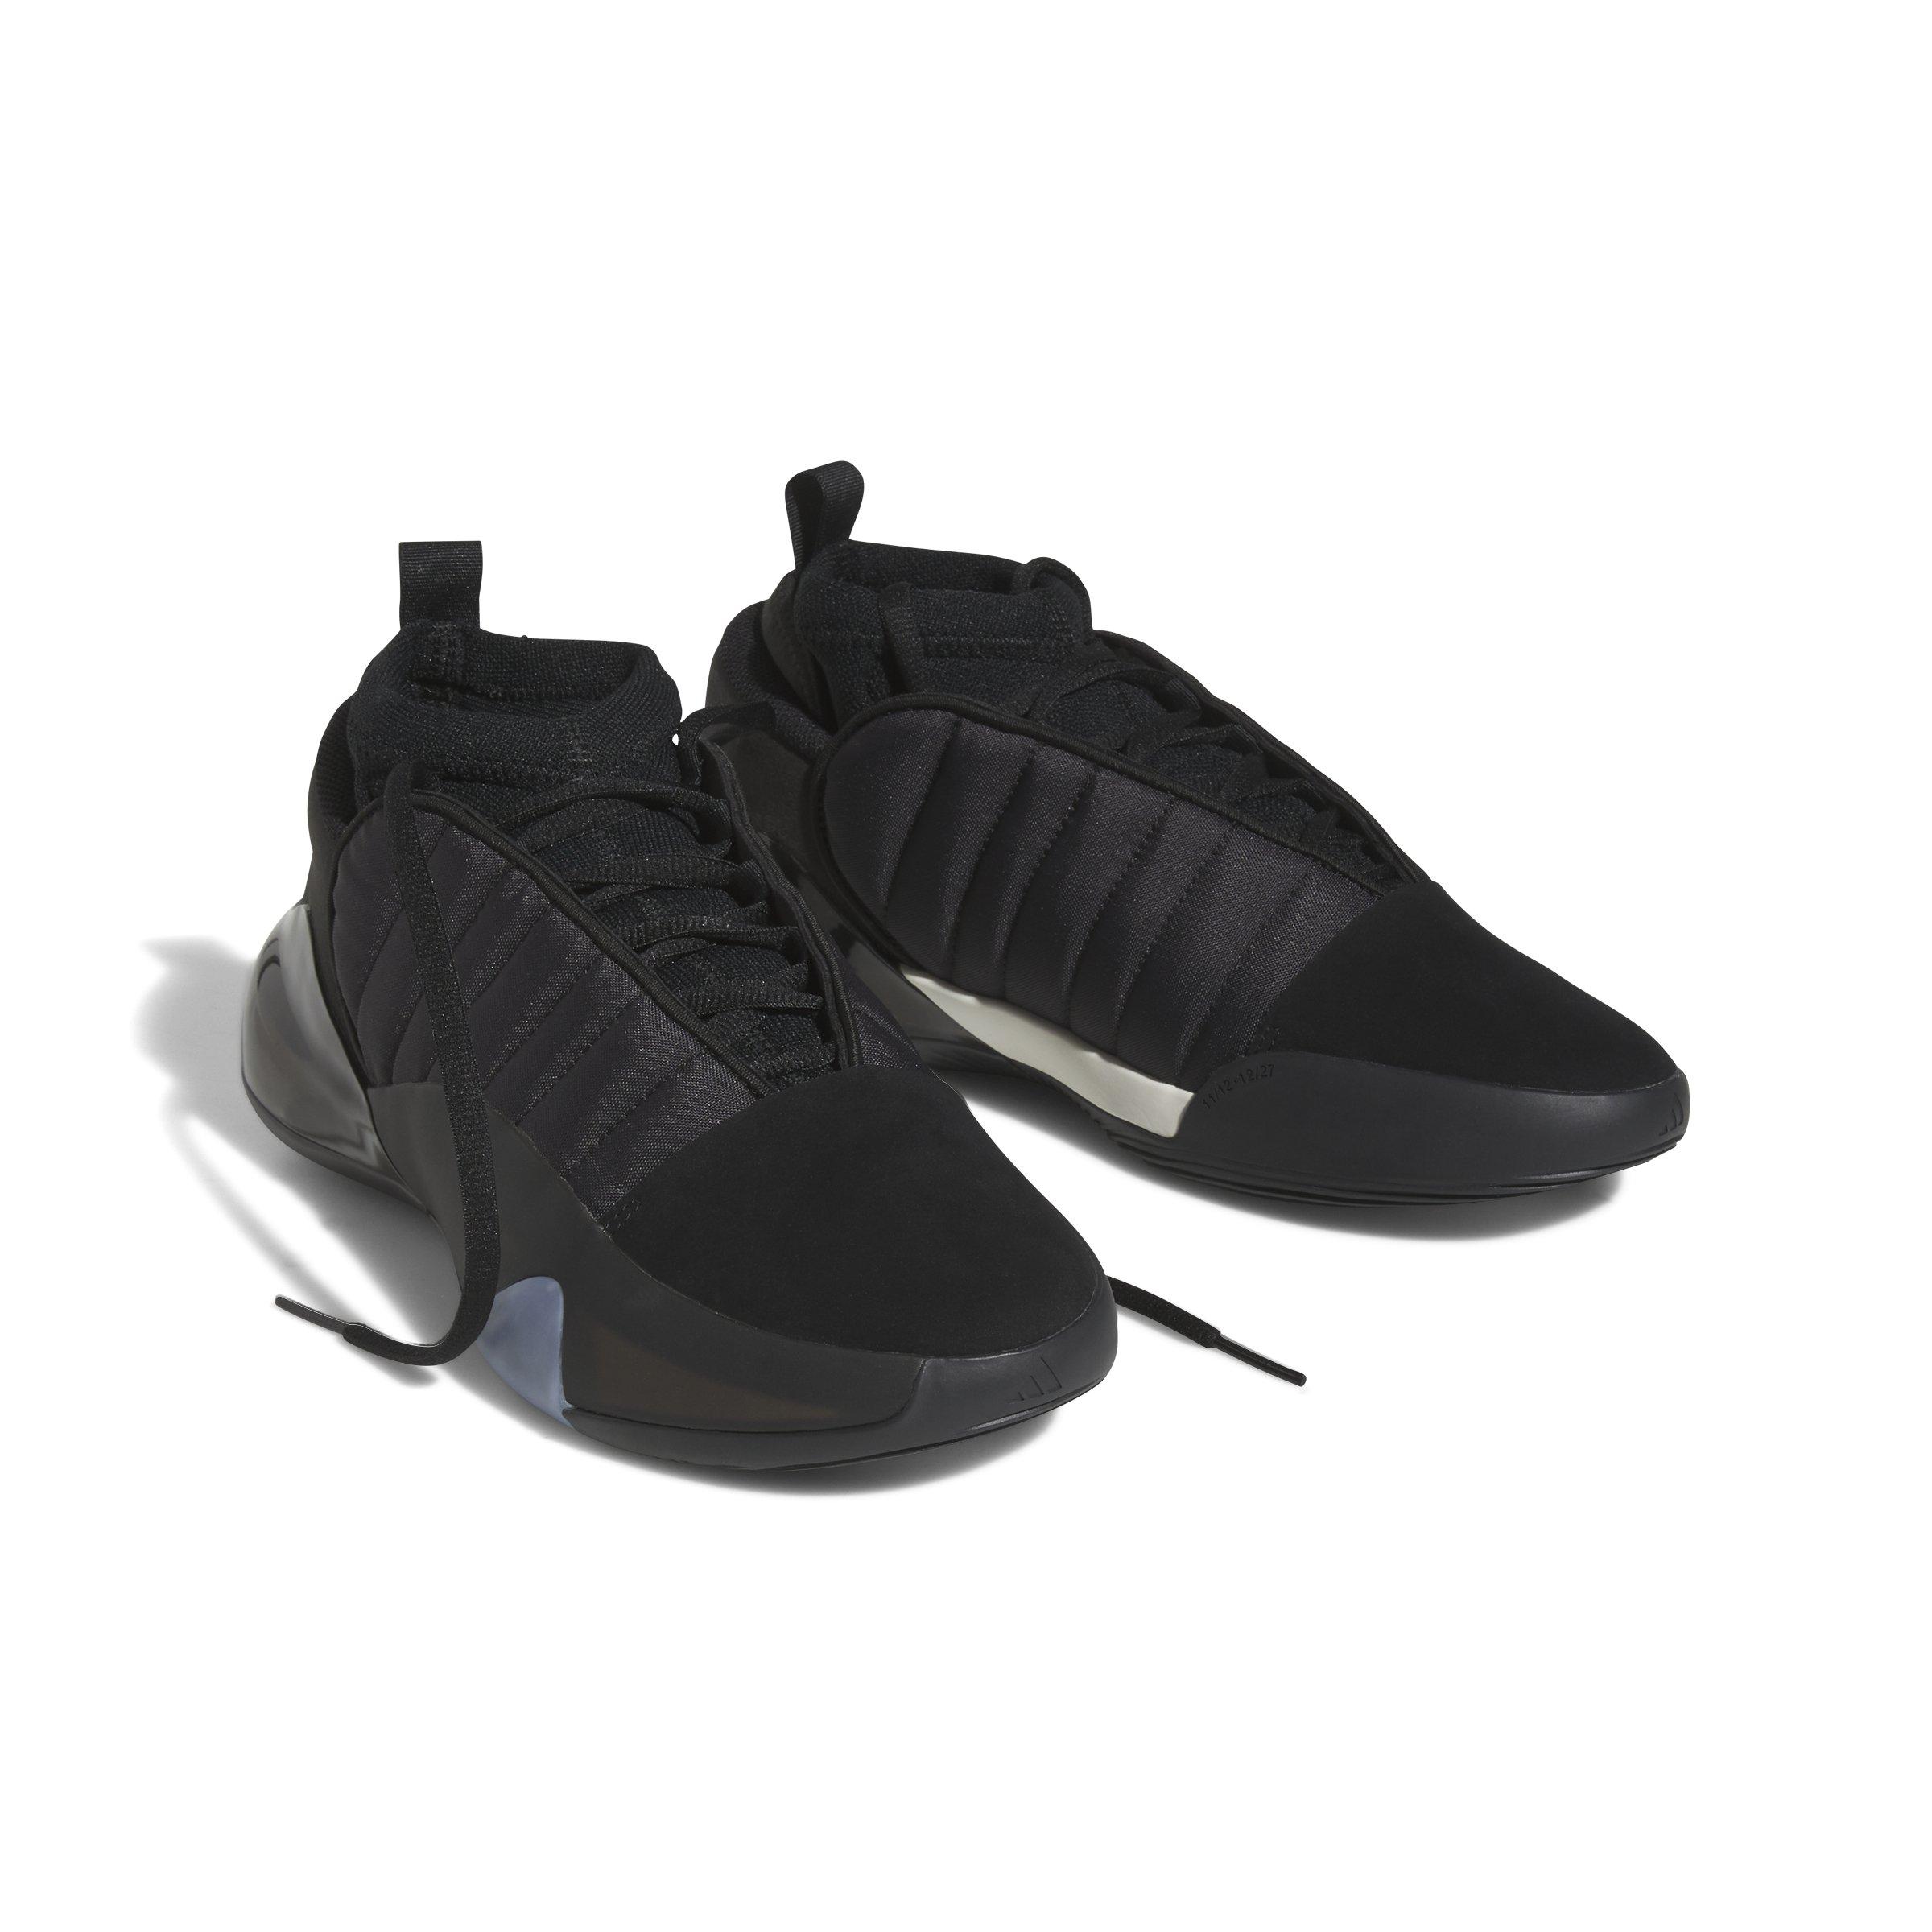 Kikker Correct doden adidas Harden Volume 7 "Core Black/Core Black/Off White" Grade School Boys'  Basketball Shoe